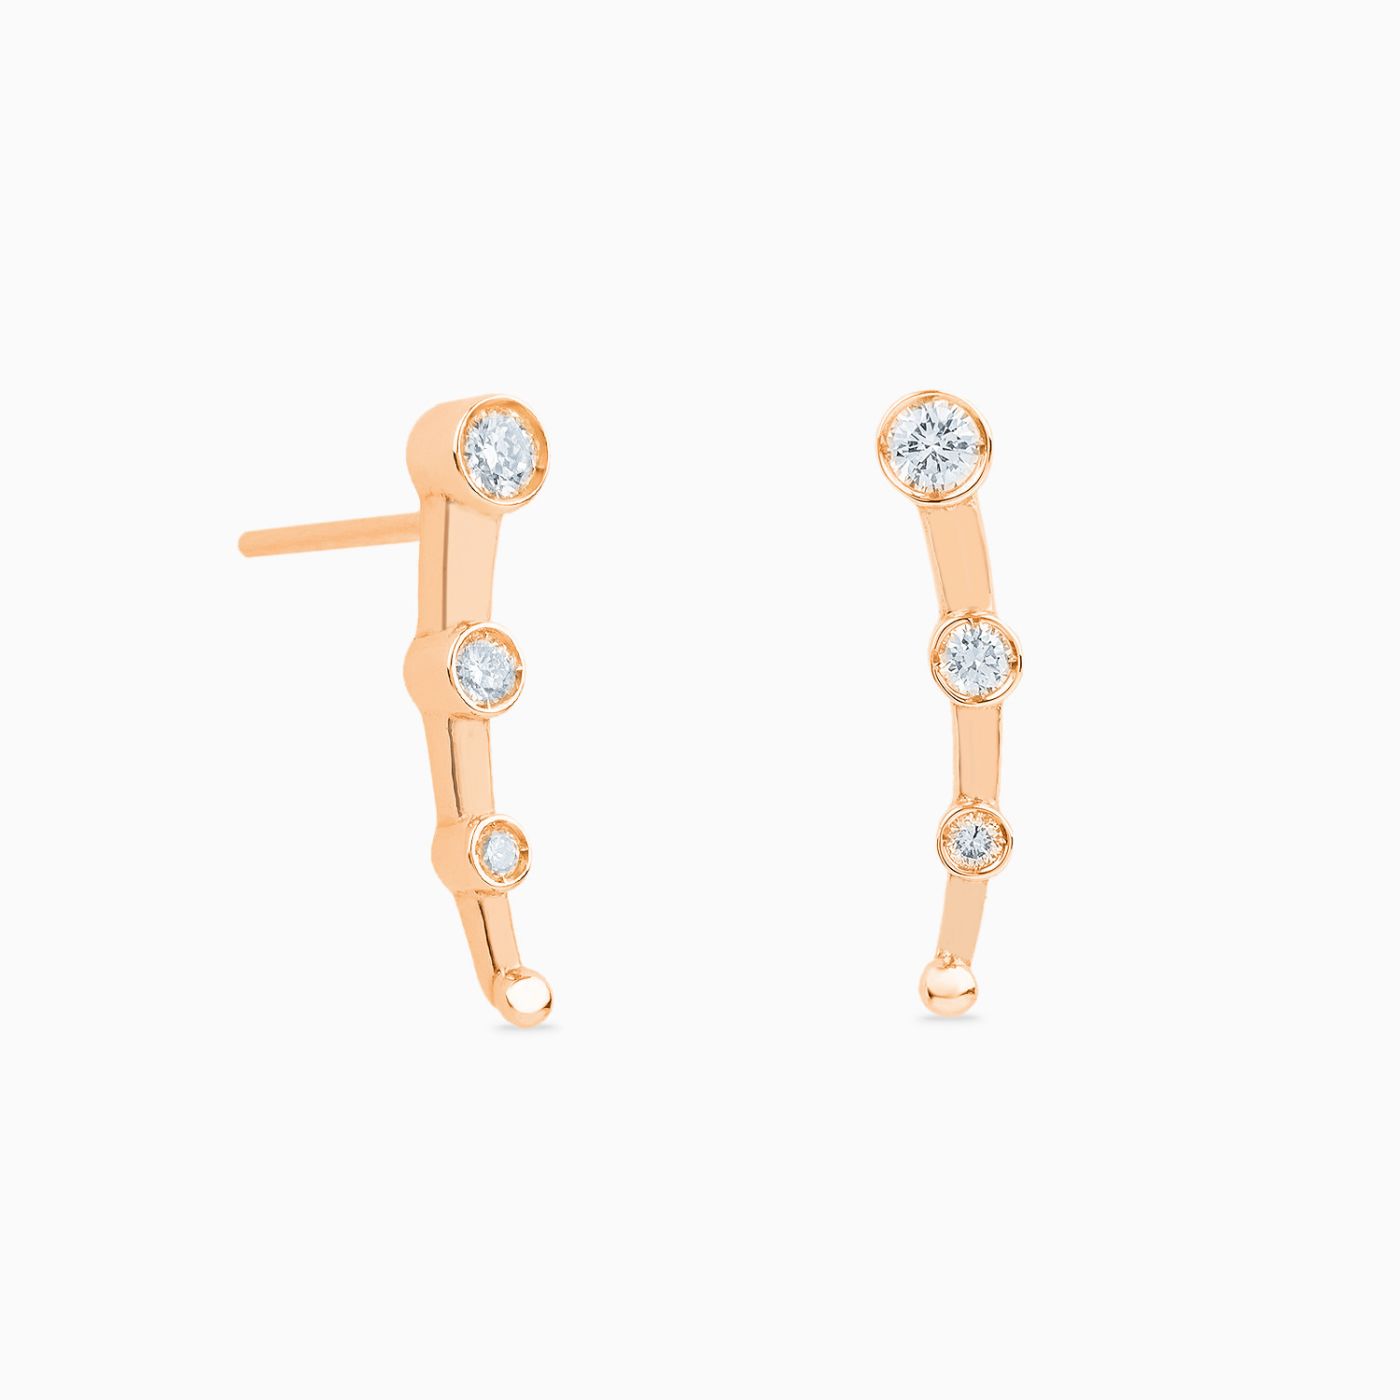 Rose gold climbing earrings with three diamonds